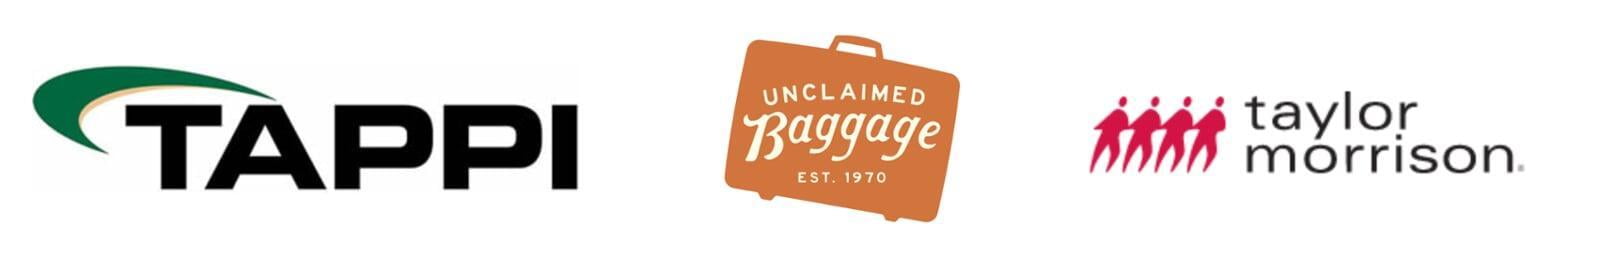 We recruit for TAPPI, Unclaimed Baggage, Taylor Morrison.